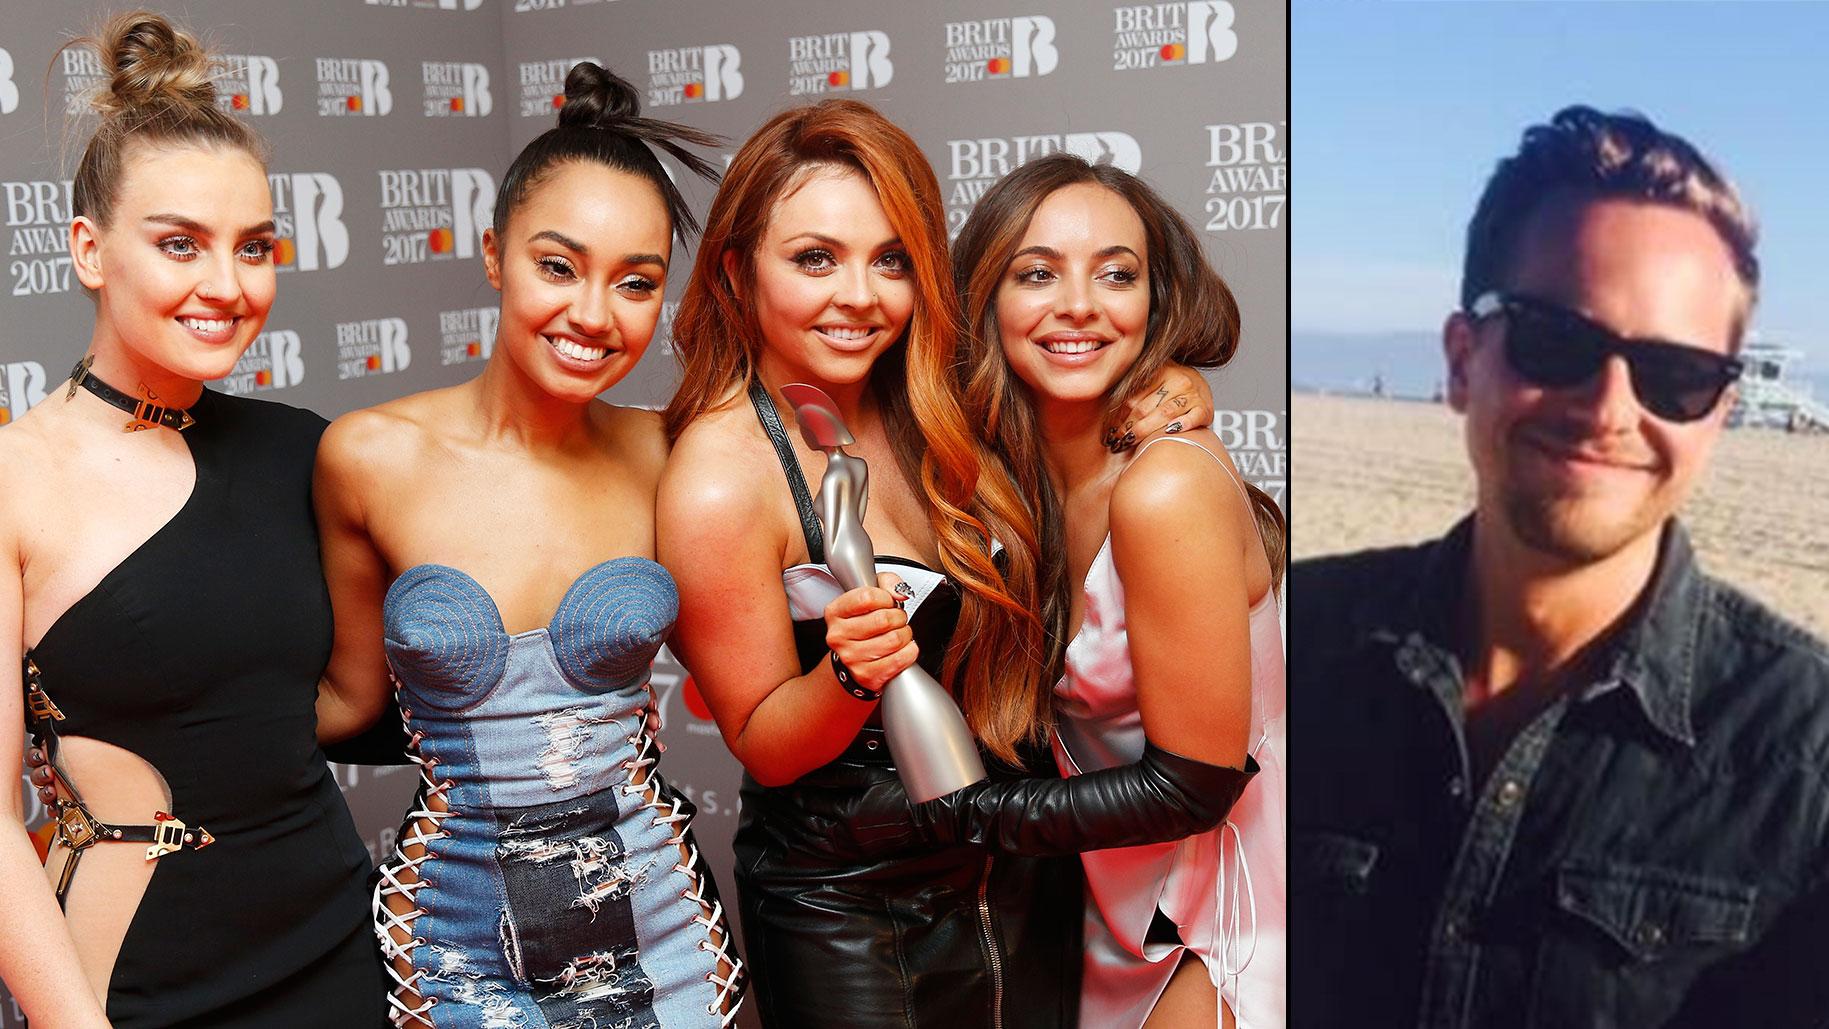 Gruppa Little Mix poserer med beviset på at de vant i kategorien beste singel. Til høyre produsent og låtskriver Edvard Førre Erfjord fra Hinna.